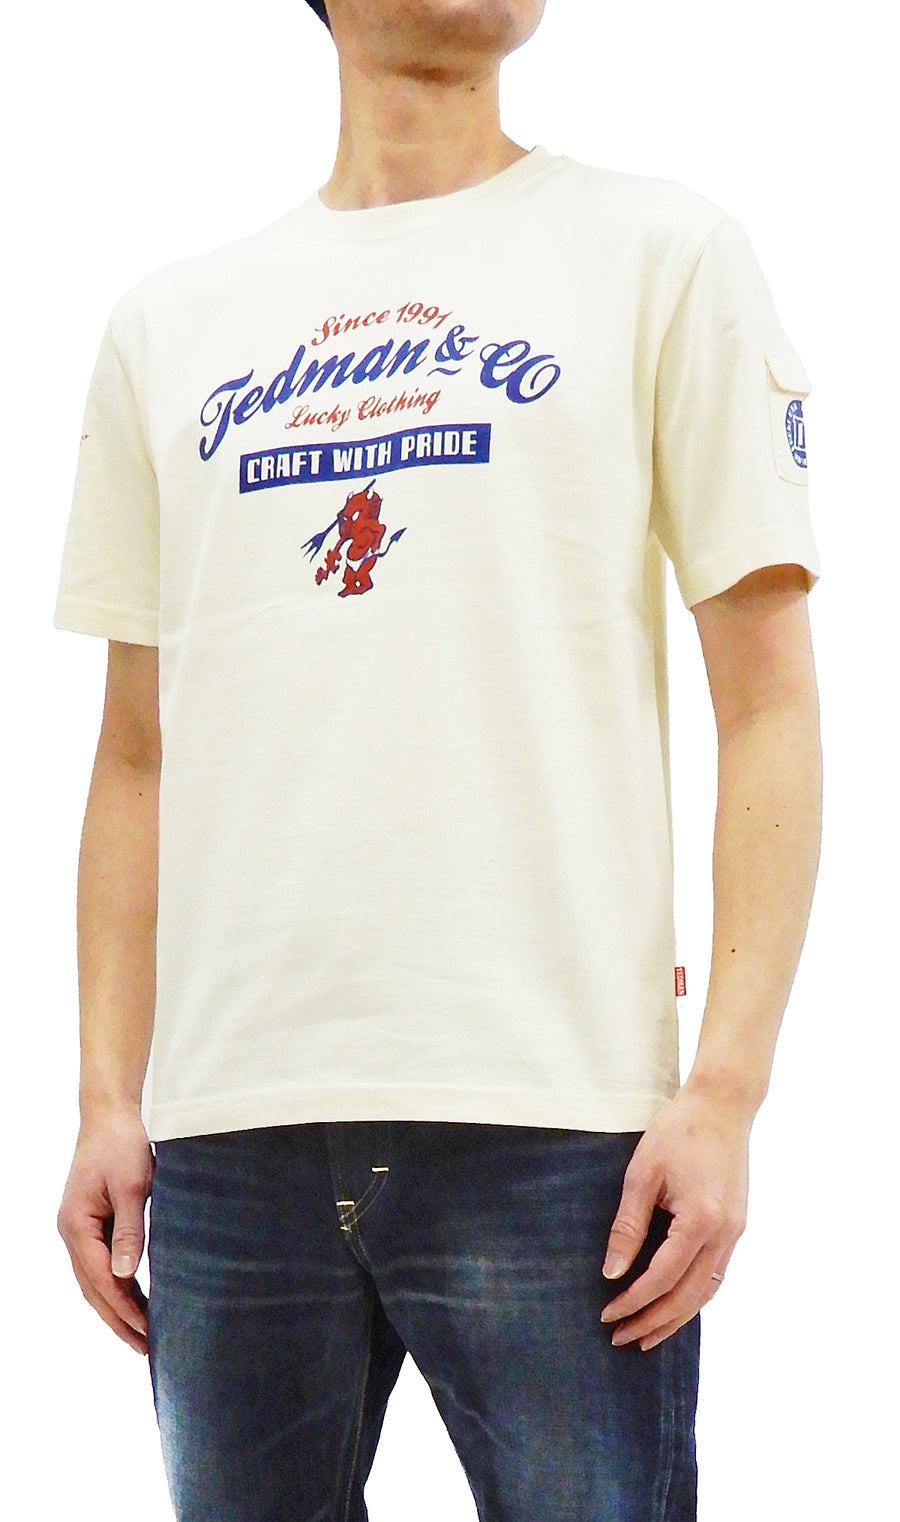 Tedman T-Shirt Men's Lucky Devil Silhouette Graphic Short Sleeve Tee Efu-Shokai TDSS-546 Off-White